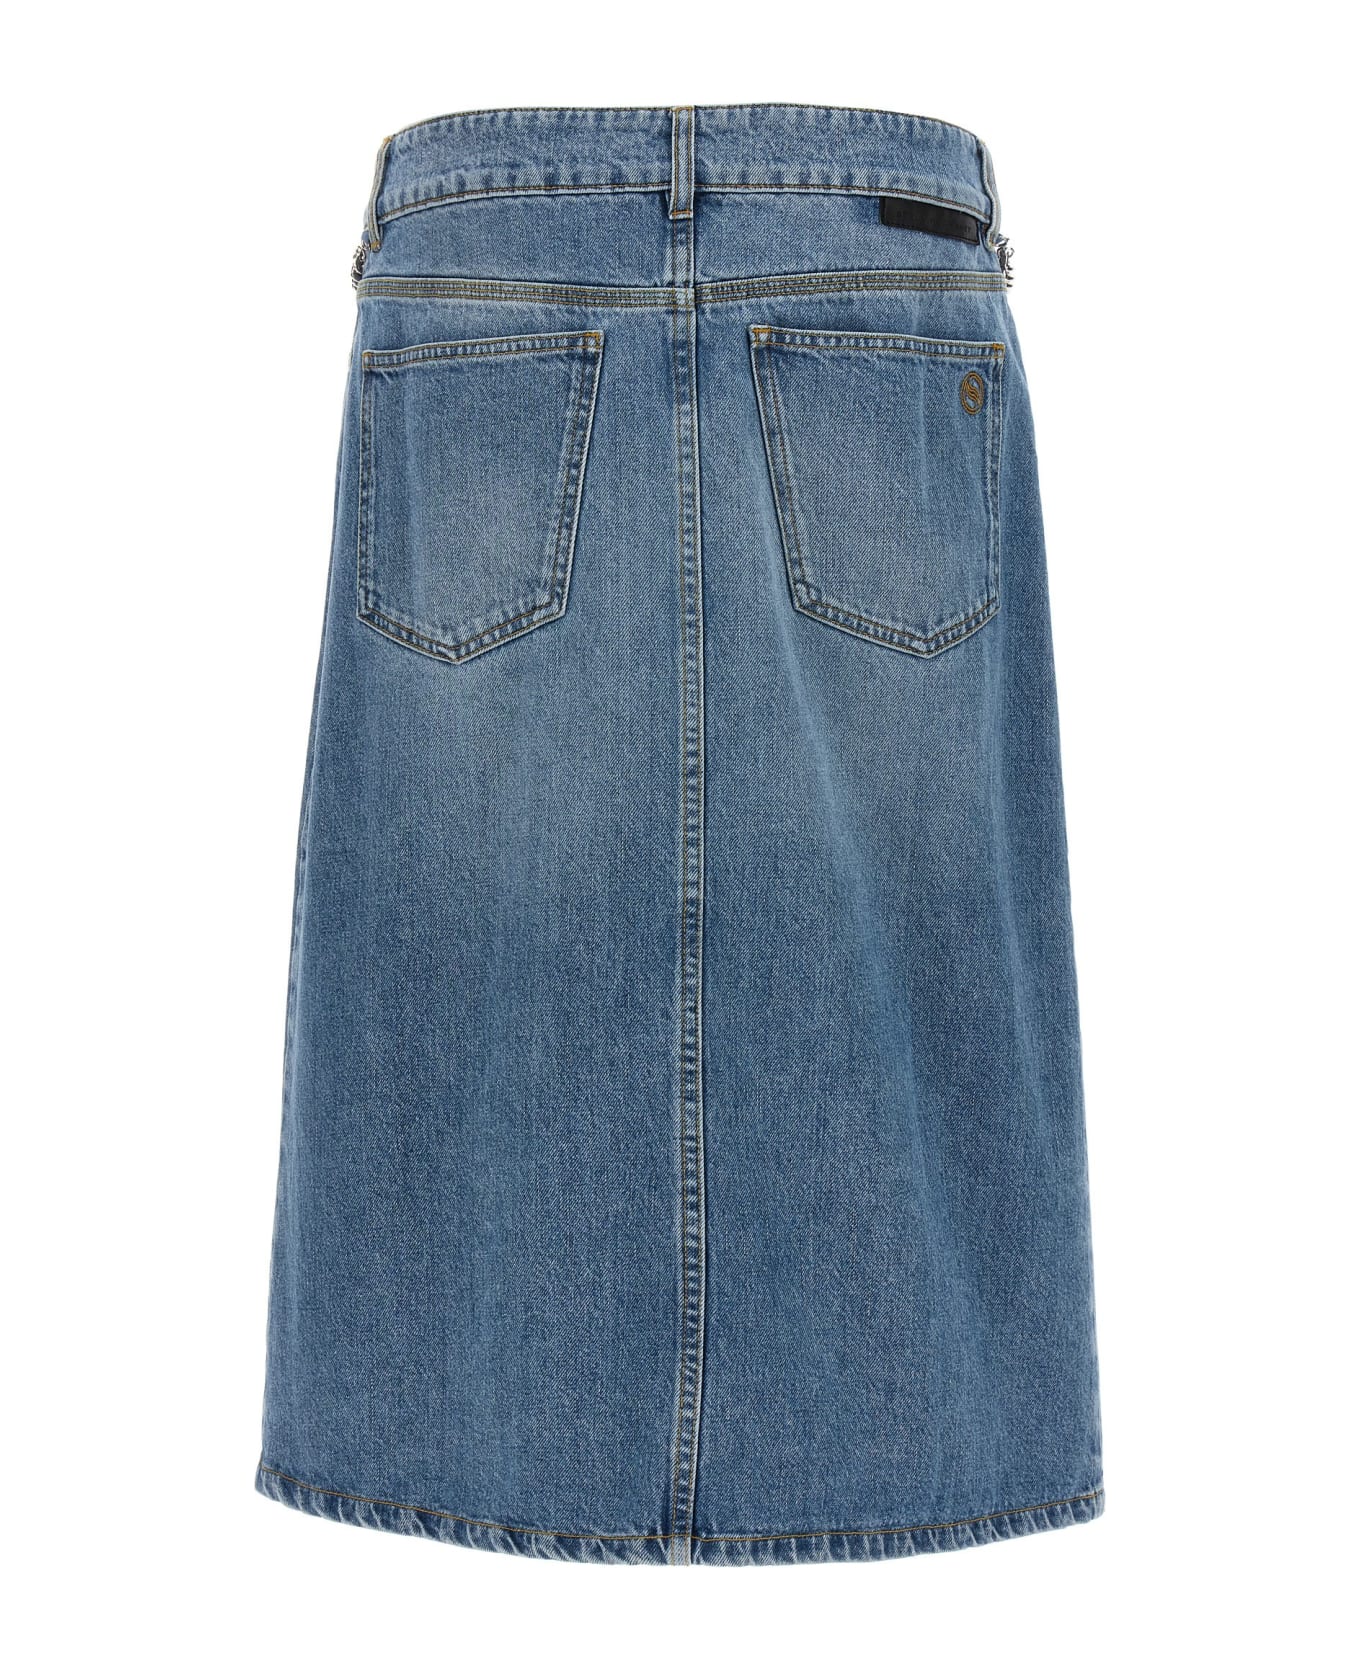 Stella McCartney Falabella Denim Skirt - Mid vintage blue